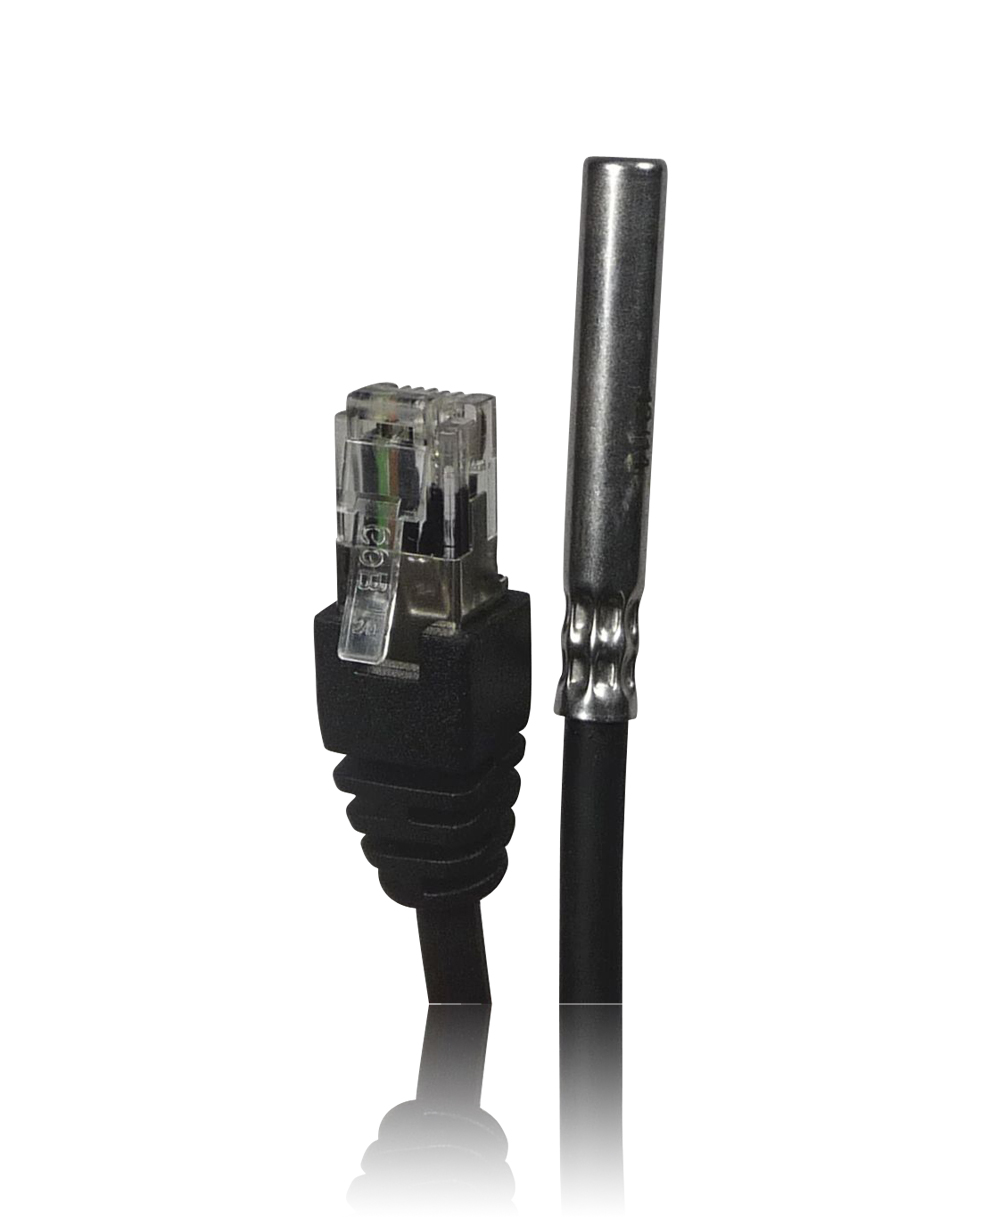 1-Wire Industrial Temperature Sensor Pro Waterproof, Serial Number, Cable Sensor